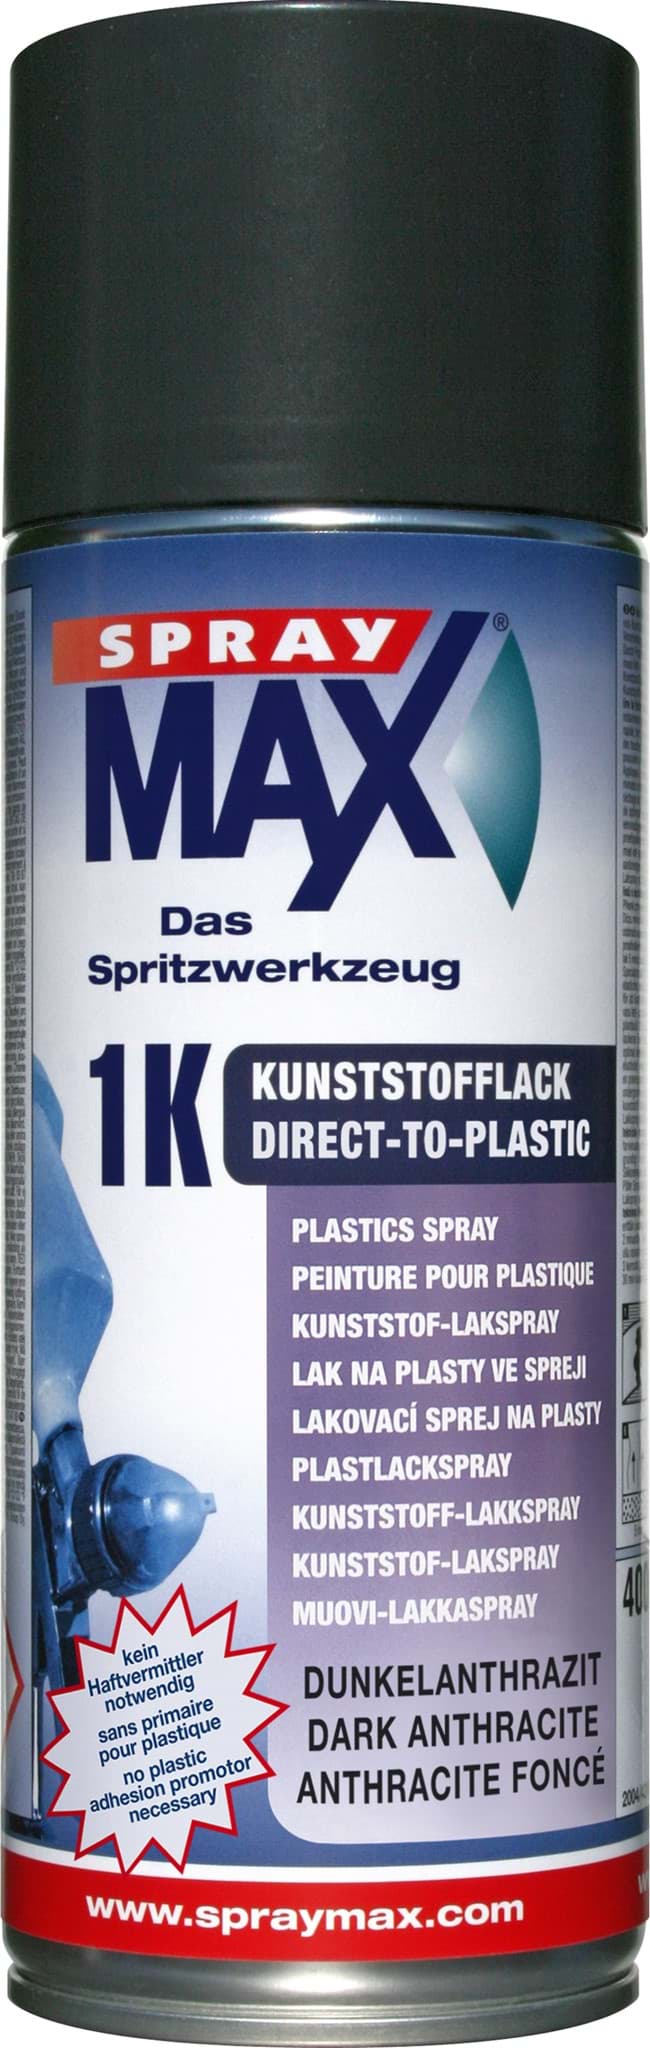 SprayMax 1K DTP-Kunststofflack Dunkelanthrazit 400ml 680045 resmi